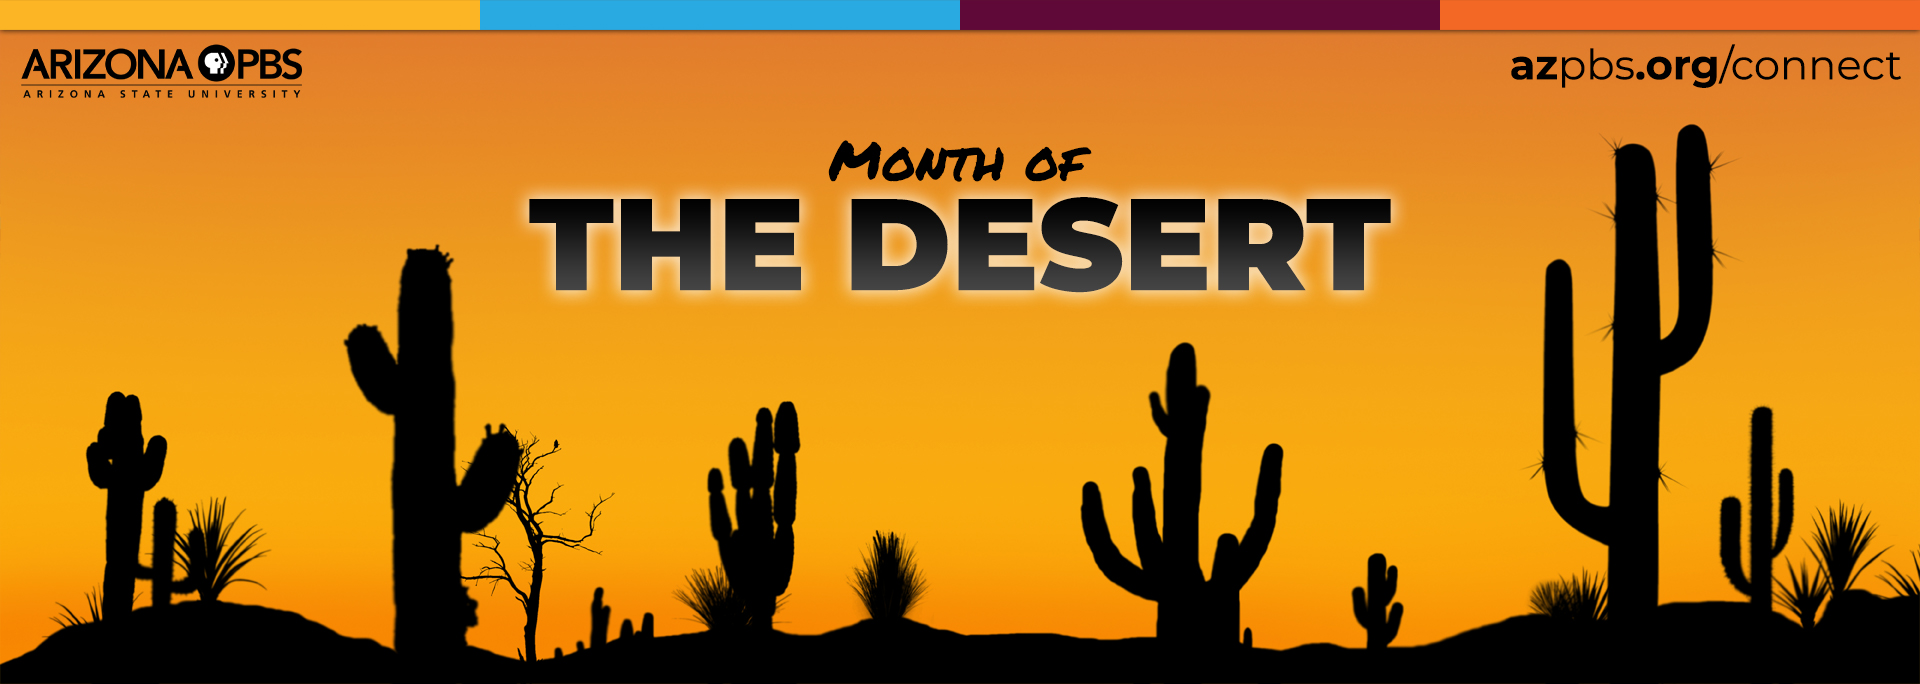 Month of the Desert